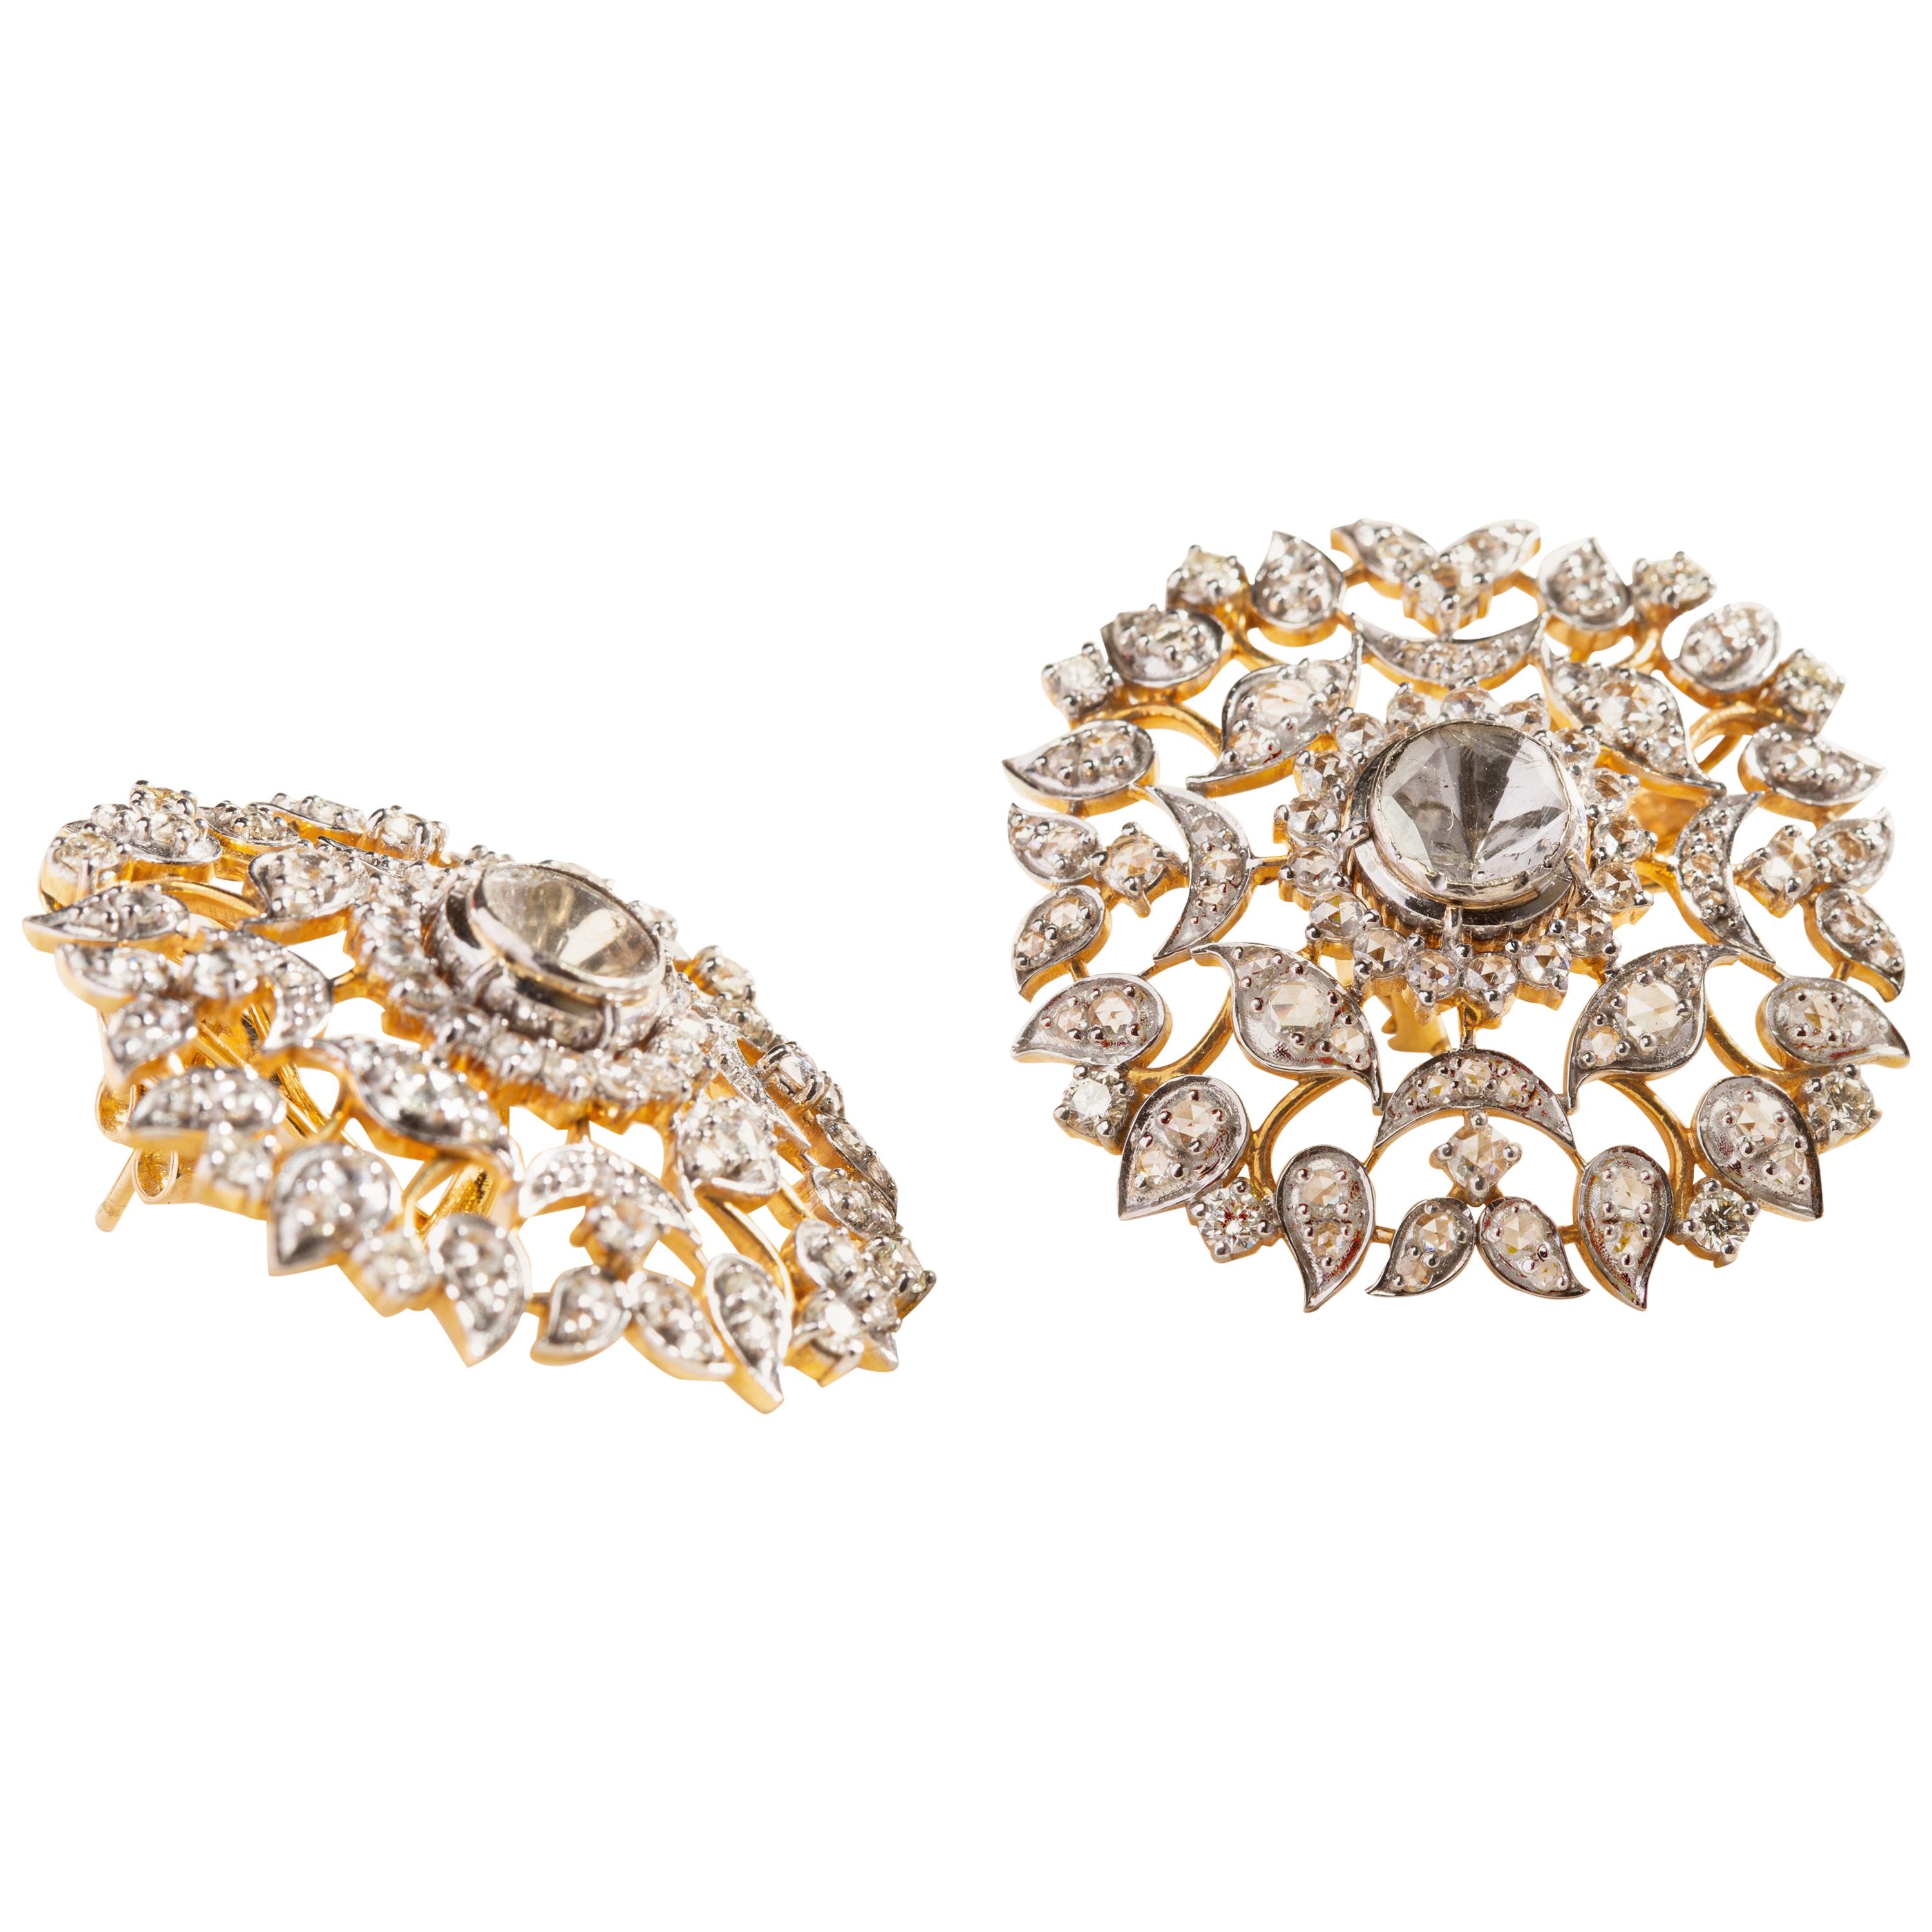 Mogul Earrings 18 Karat Gold with Brilliant, Rose Cut, and Uncut Diamonds For Sale